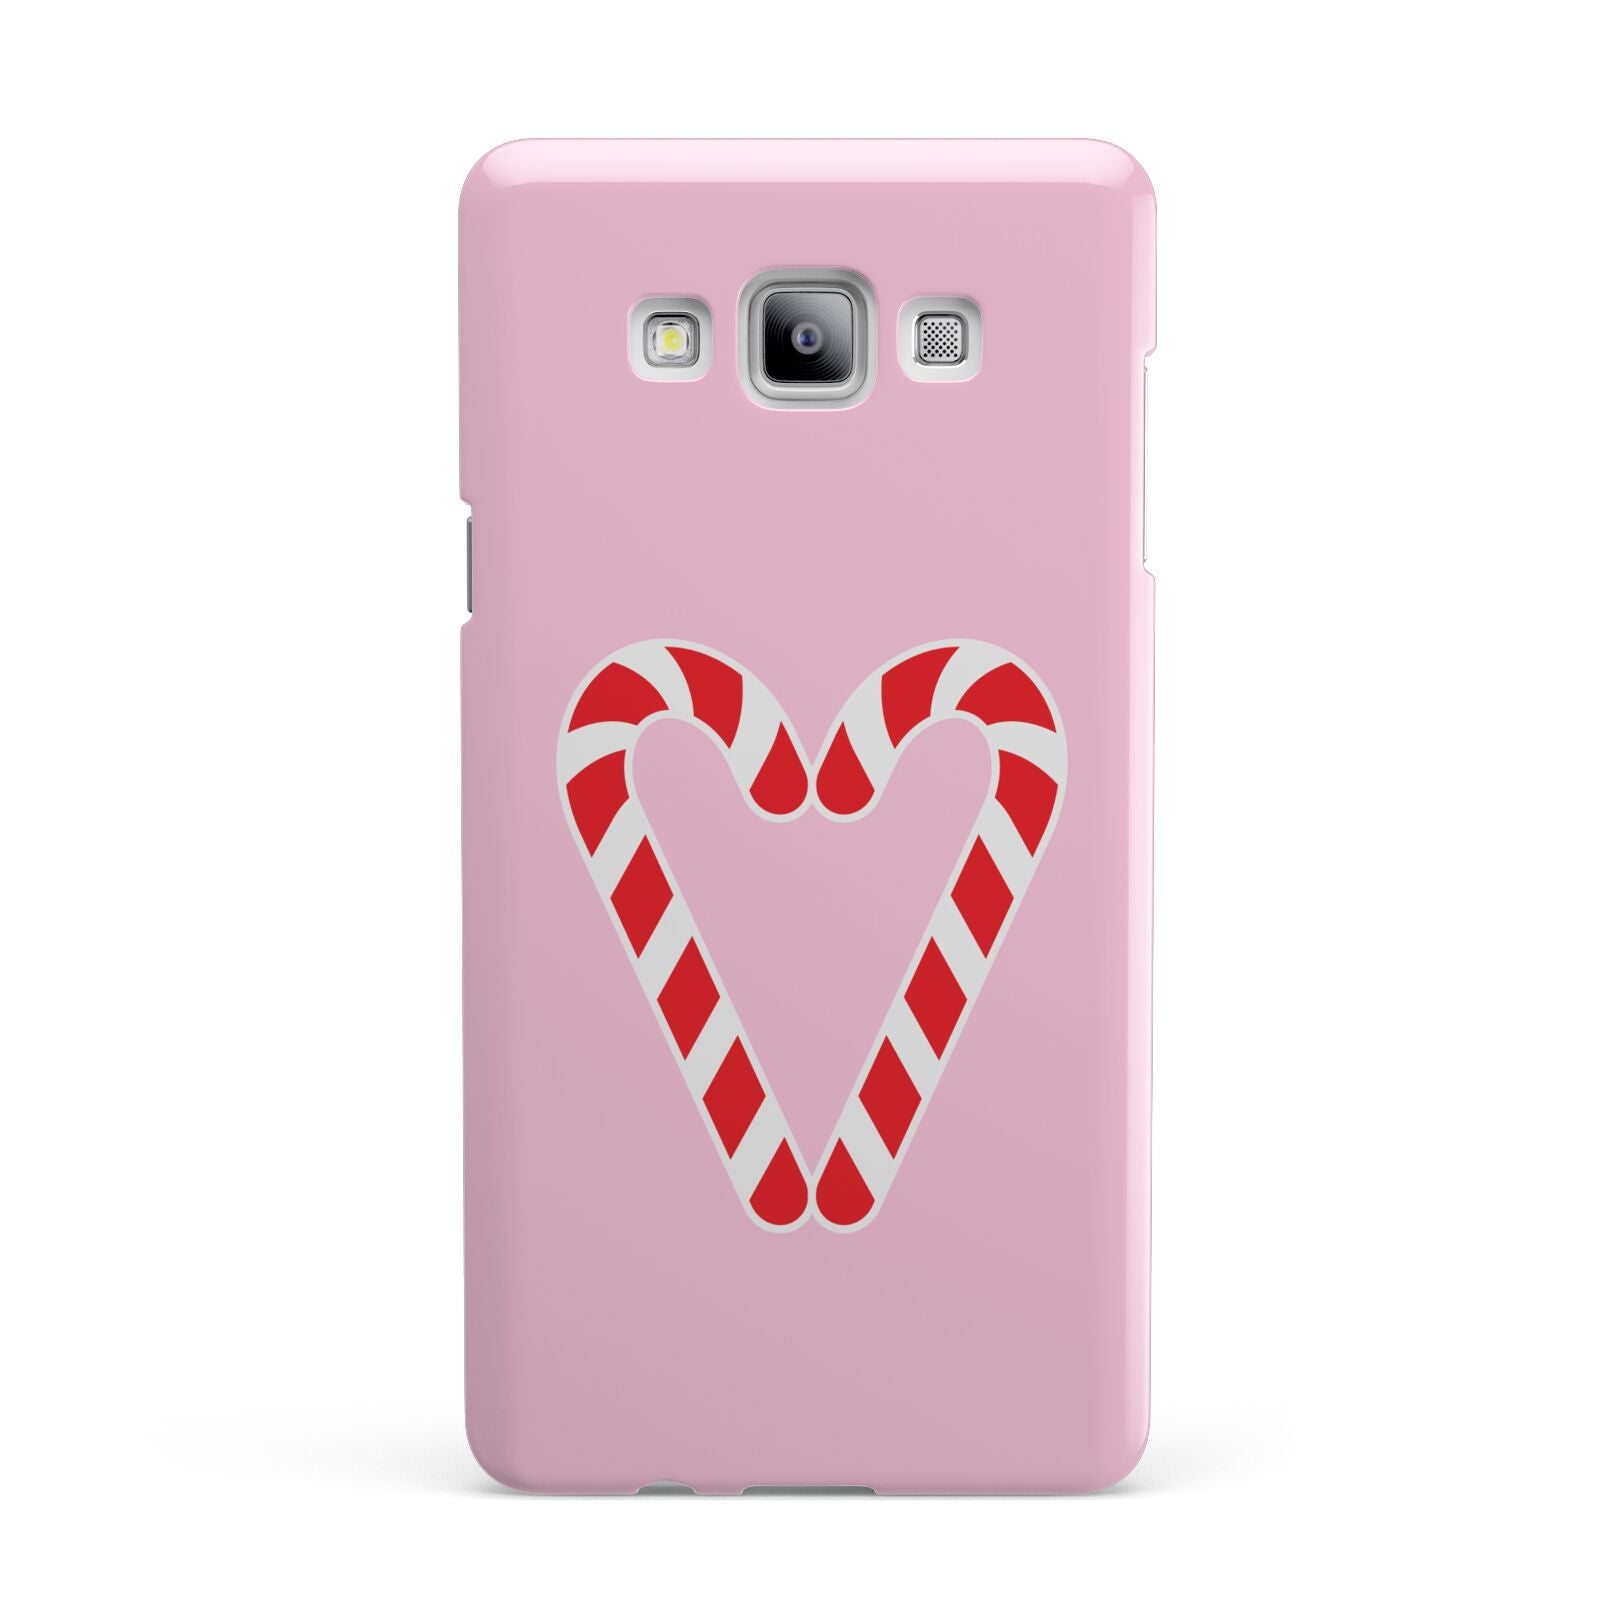 Candy Cane Heart Samsung Galaxy A7 2015 Case